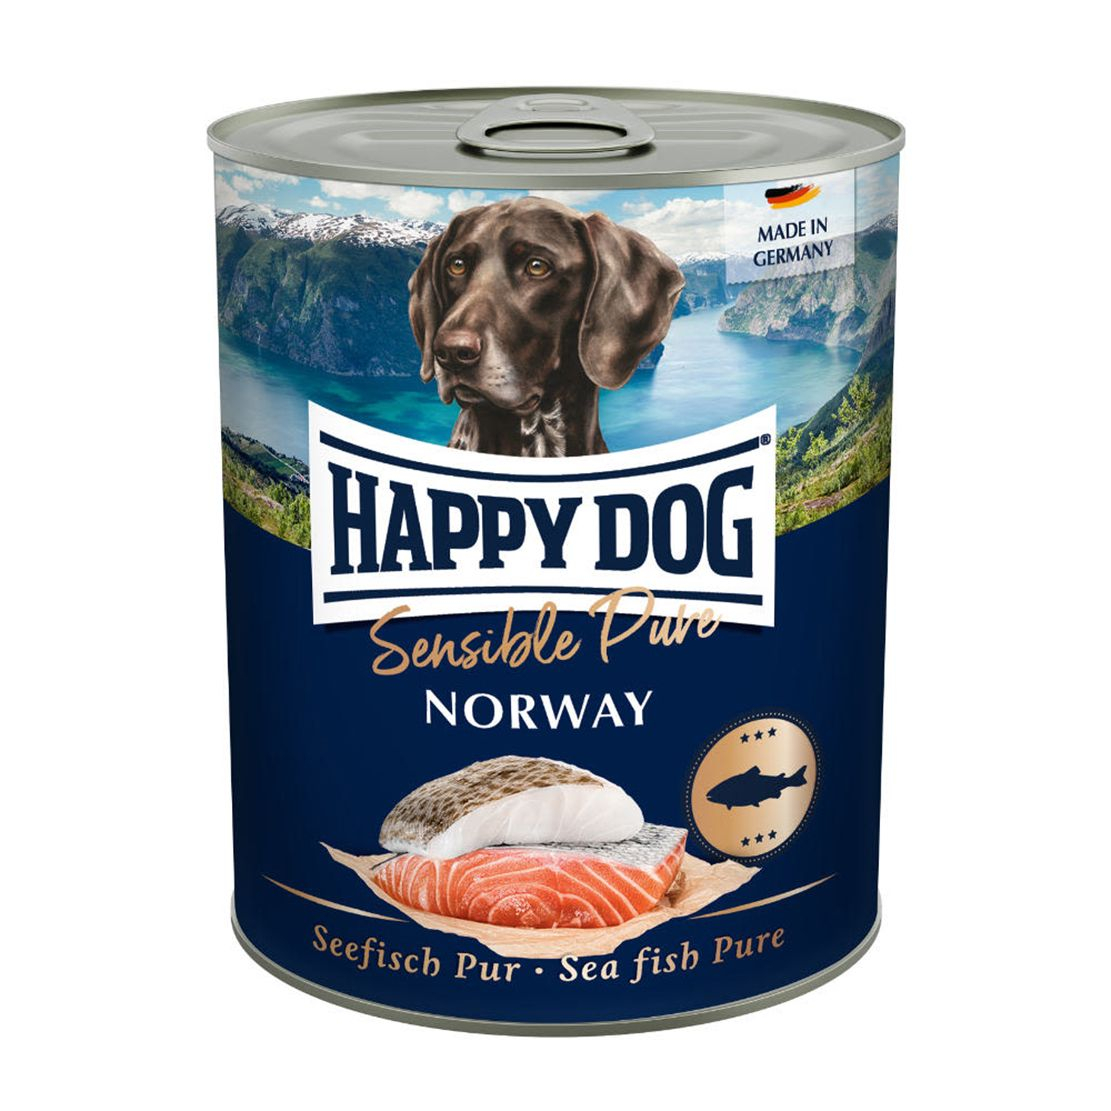 Happy Dog Lachs Pur Norway - 800 g / lazac